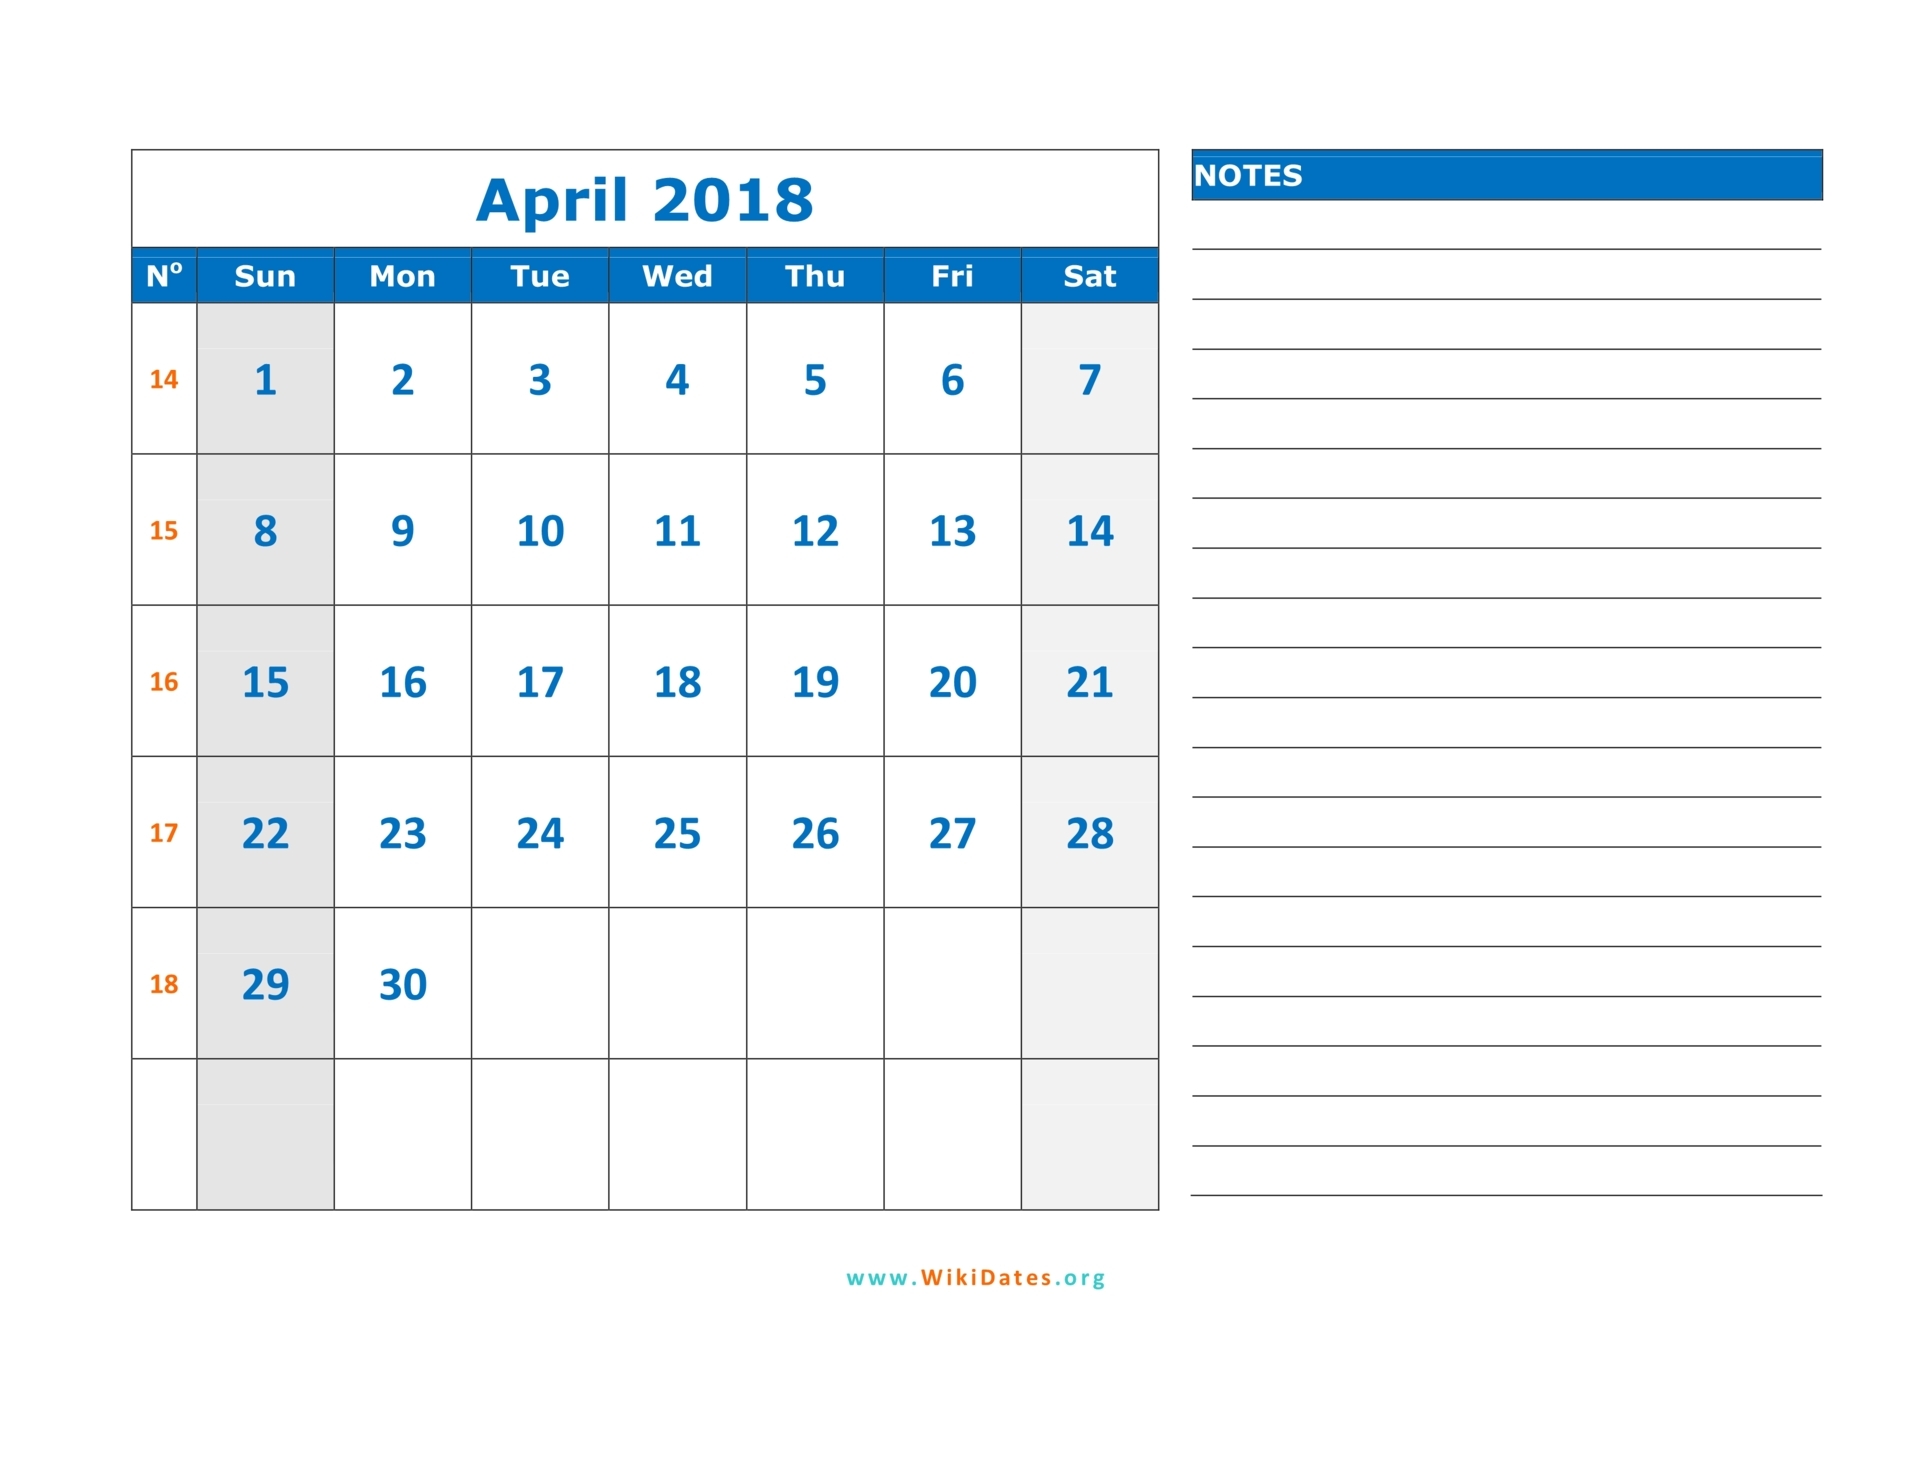 April 2018 Calendar | WikiDates.org